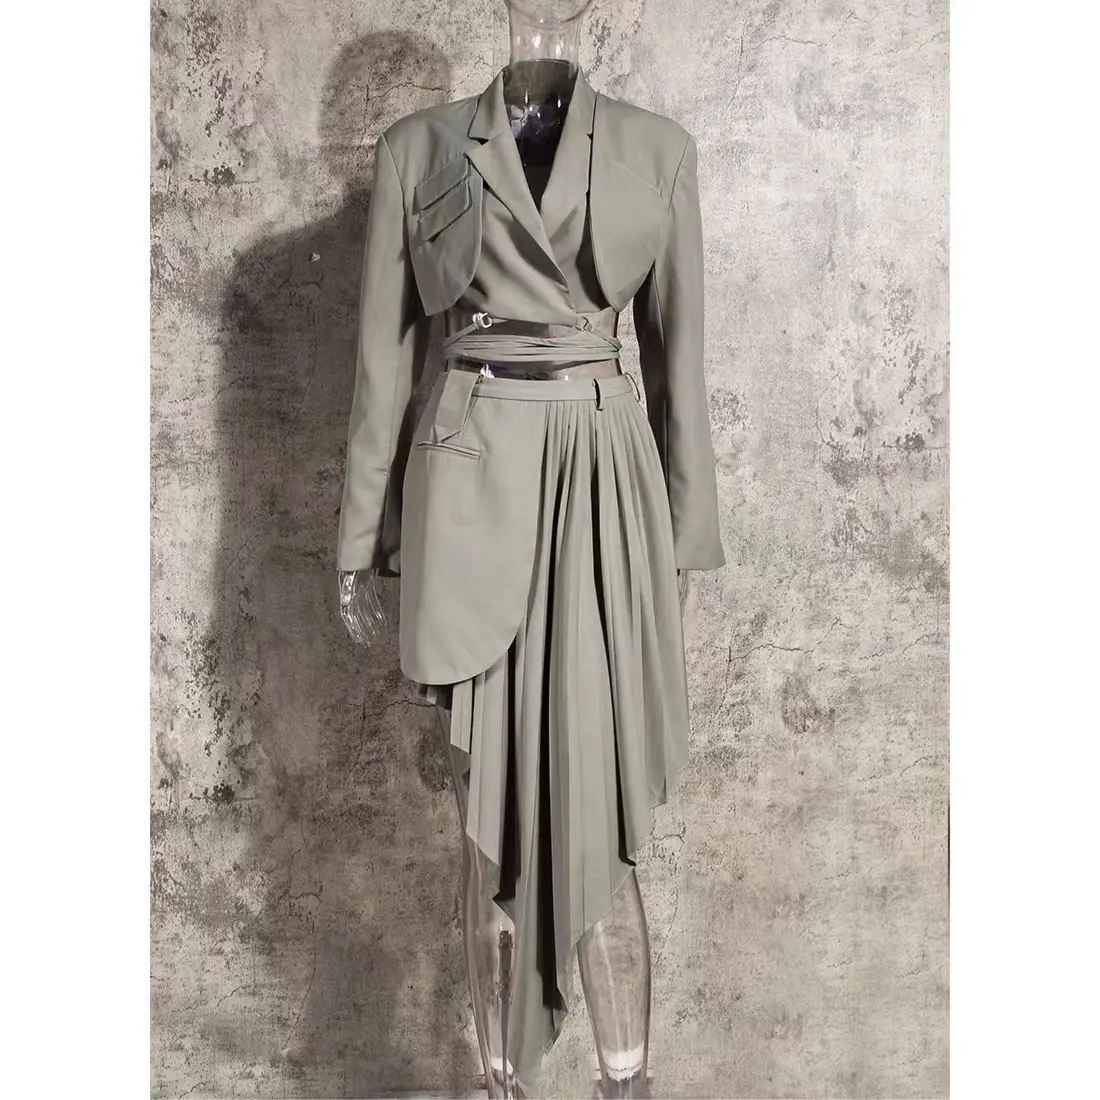 OUDINA Fashion Asymmetric Women's 2 Piece Set Crop Blazer Tops Two Piece Suit Jacket Ladies Skirt Suits